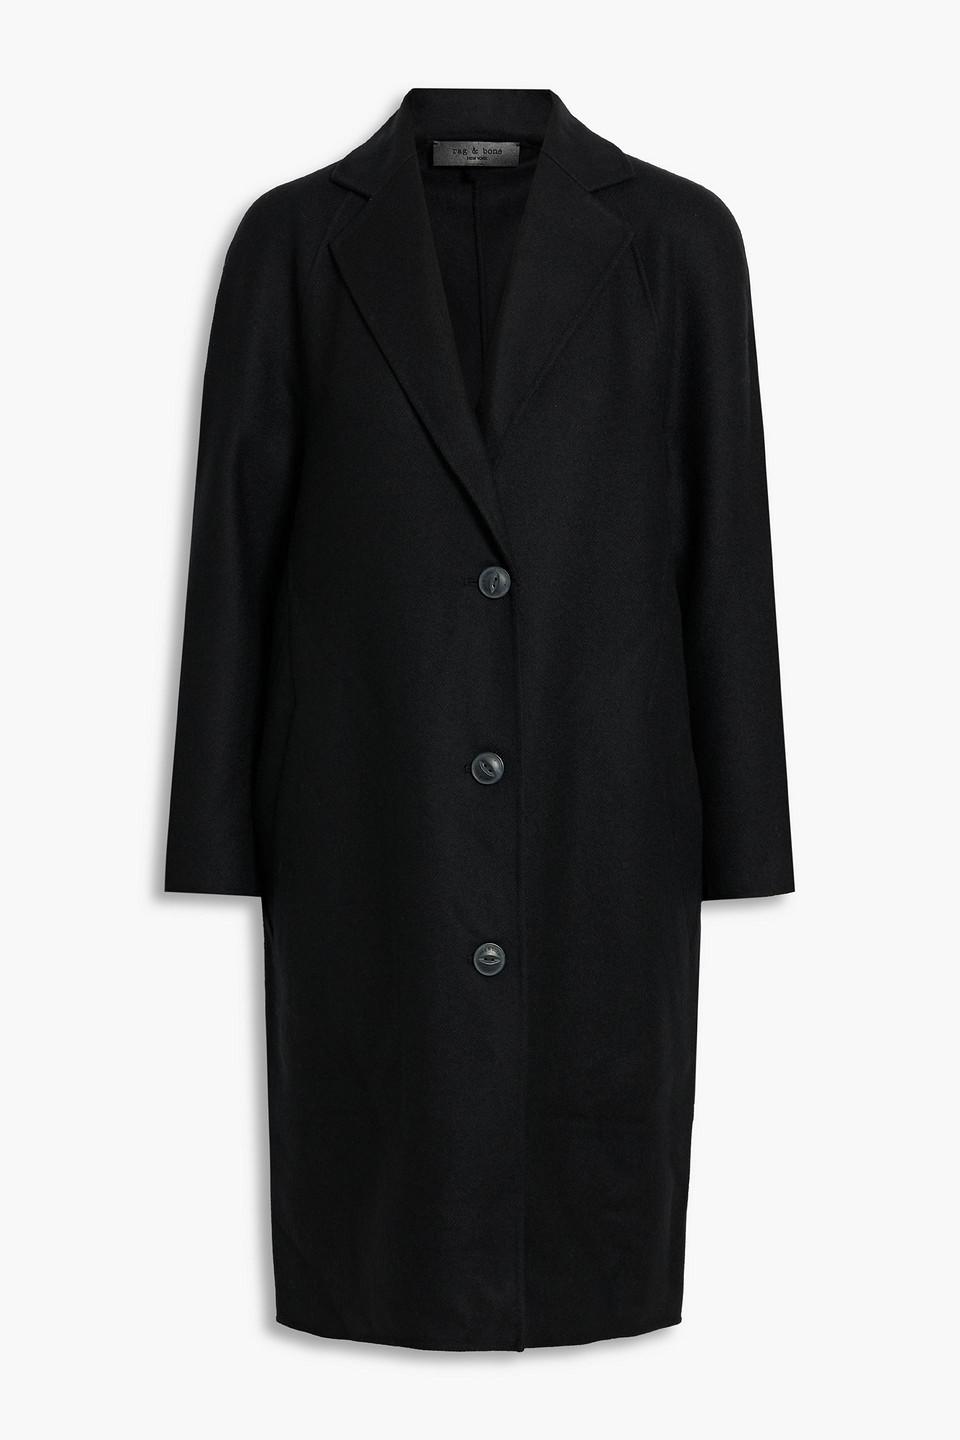 Rag & Bone Raya Wool-blend Felt Coat in Black | Lyst